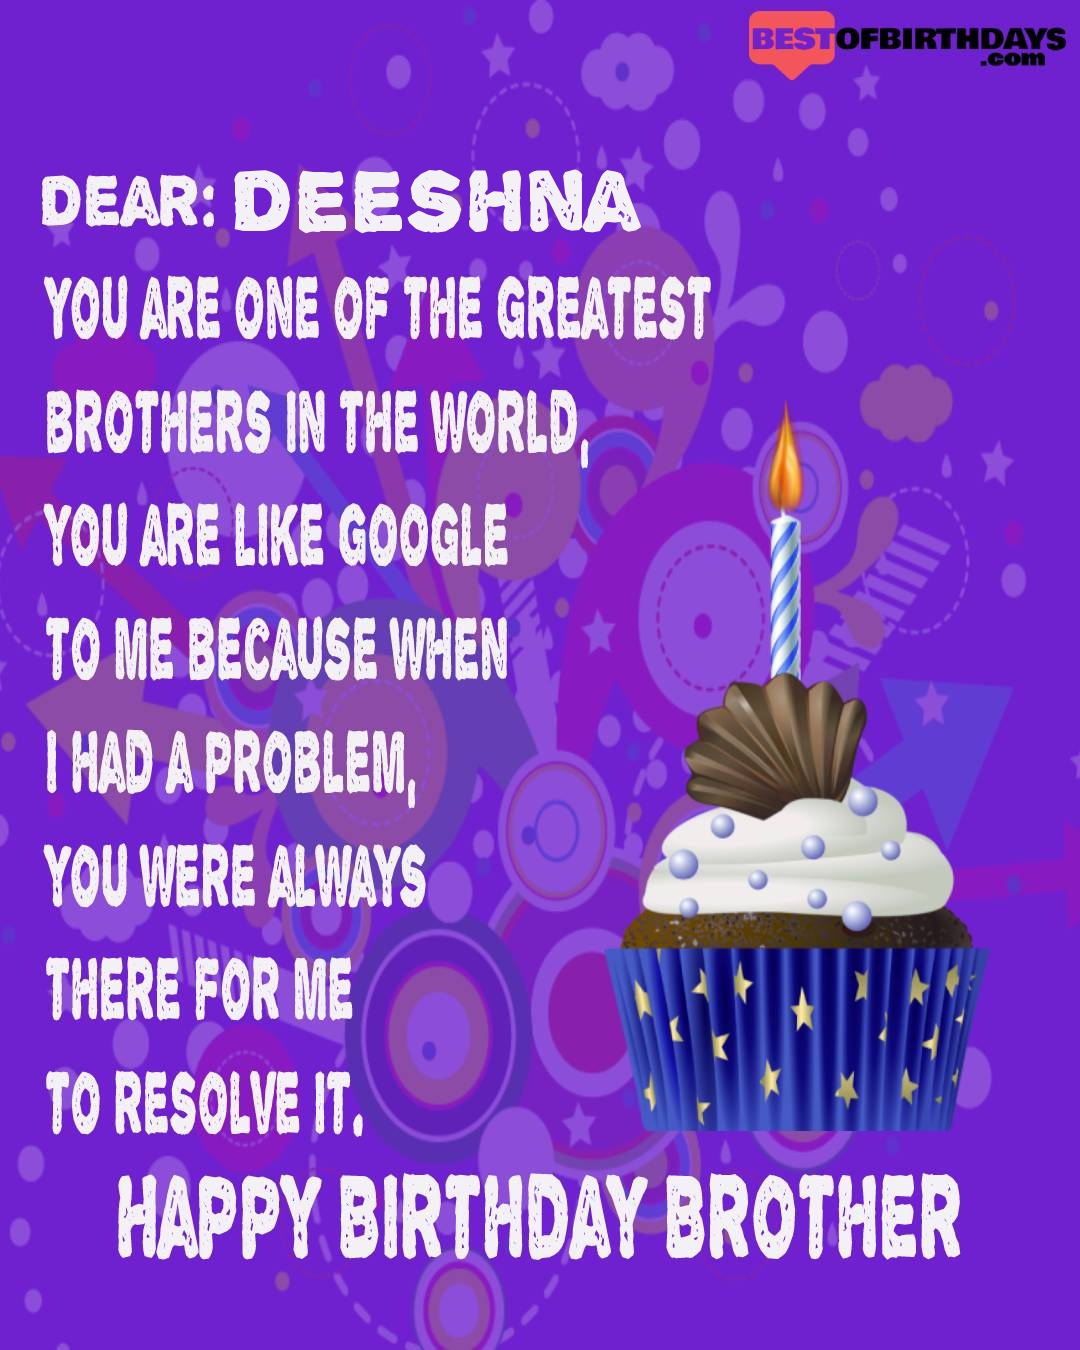 Happy birthday deeshna bhai brother bro